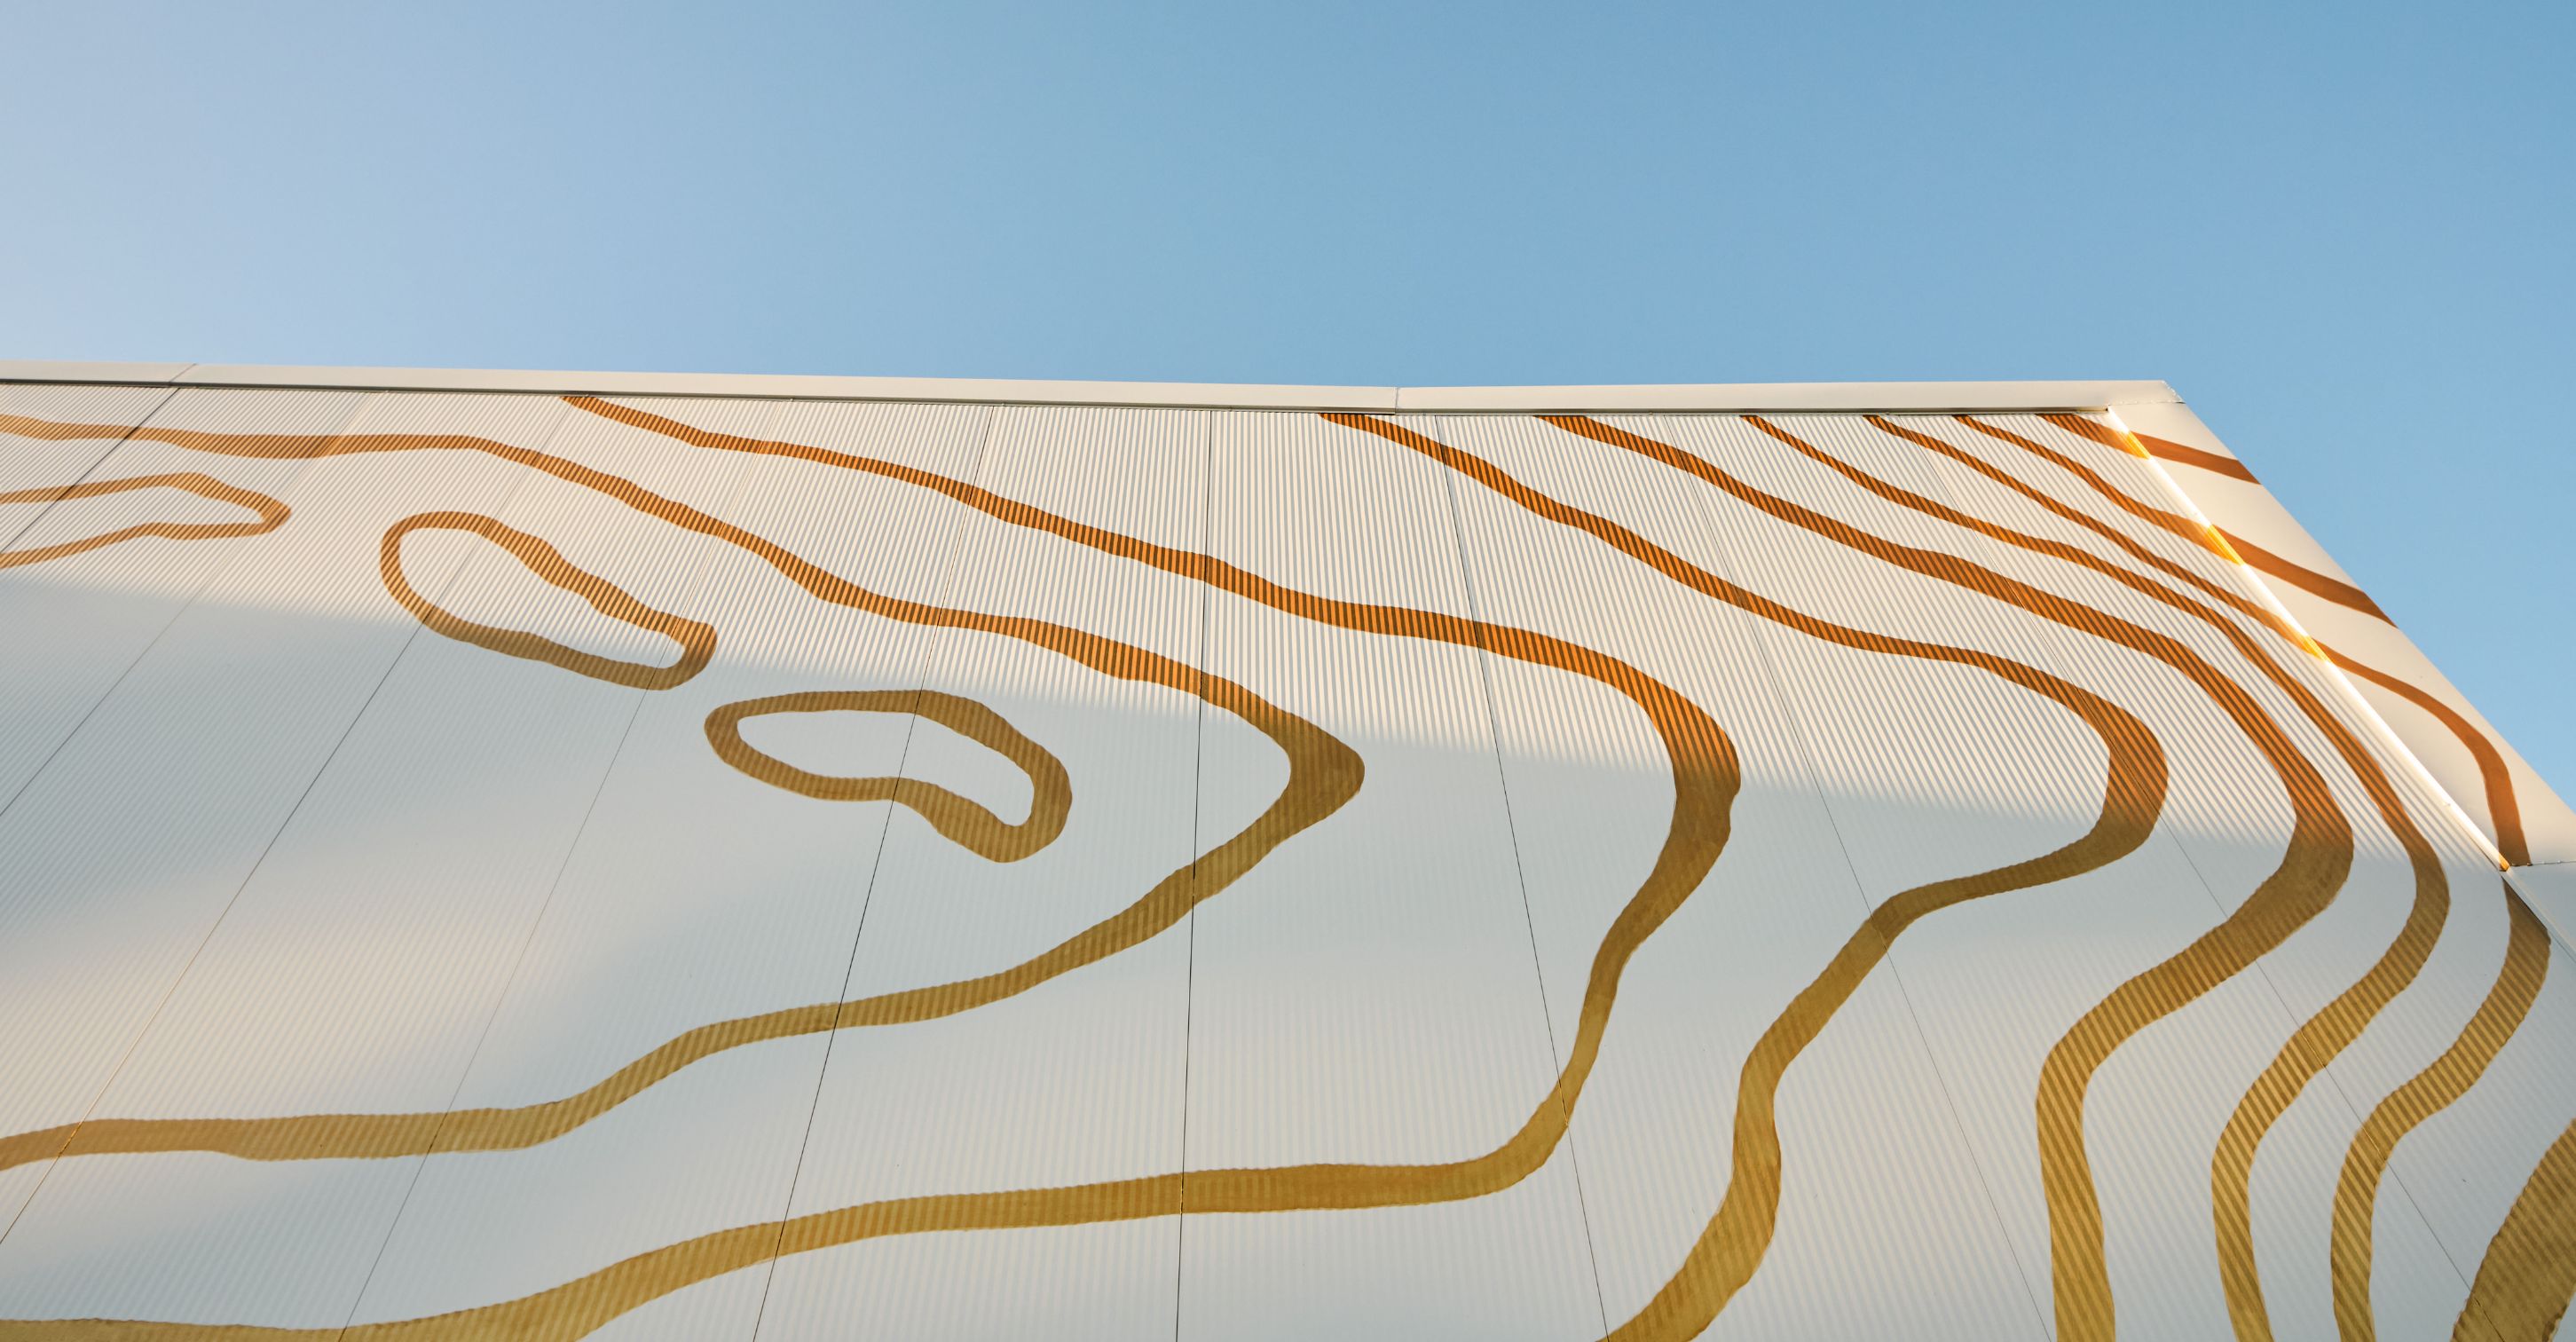 Golden motifs wrap around the building's exterior.